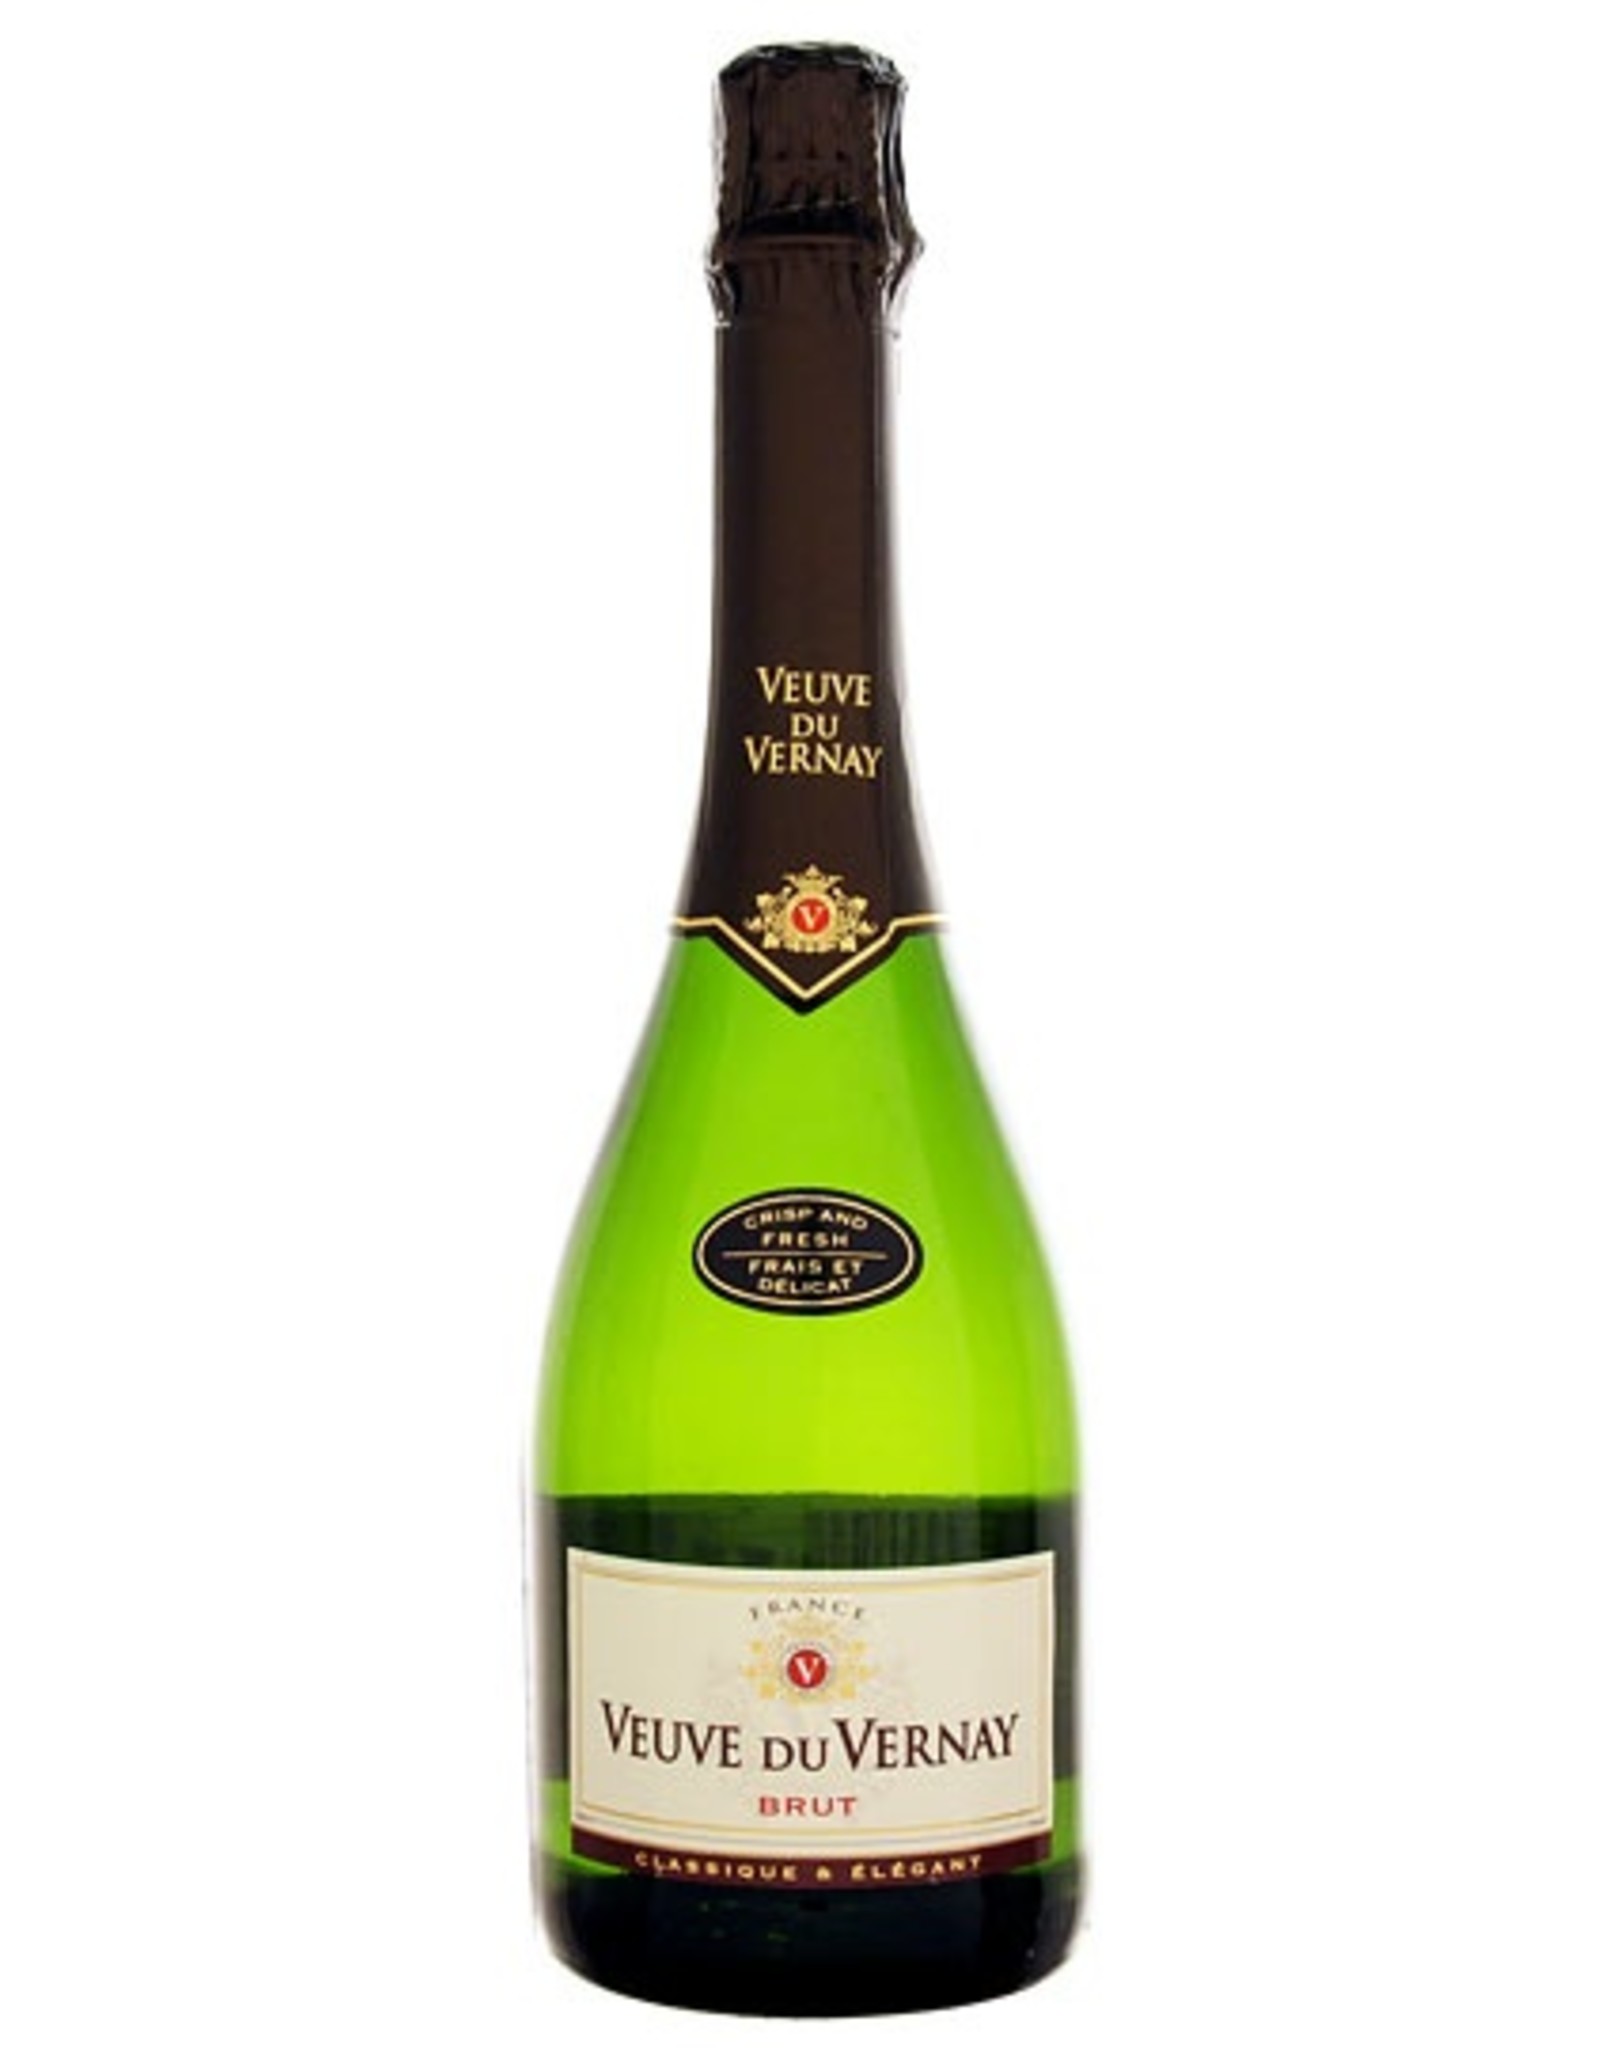 Шампанское veuve alban. Veuve Pelletier шампанское. Veuve de Vernay шампанское. Шампанское Беатриче брют. Вино игр Champagne Veuve Bonneval роз брют.